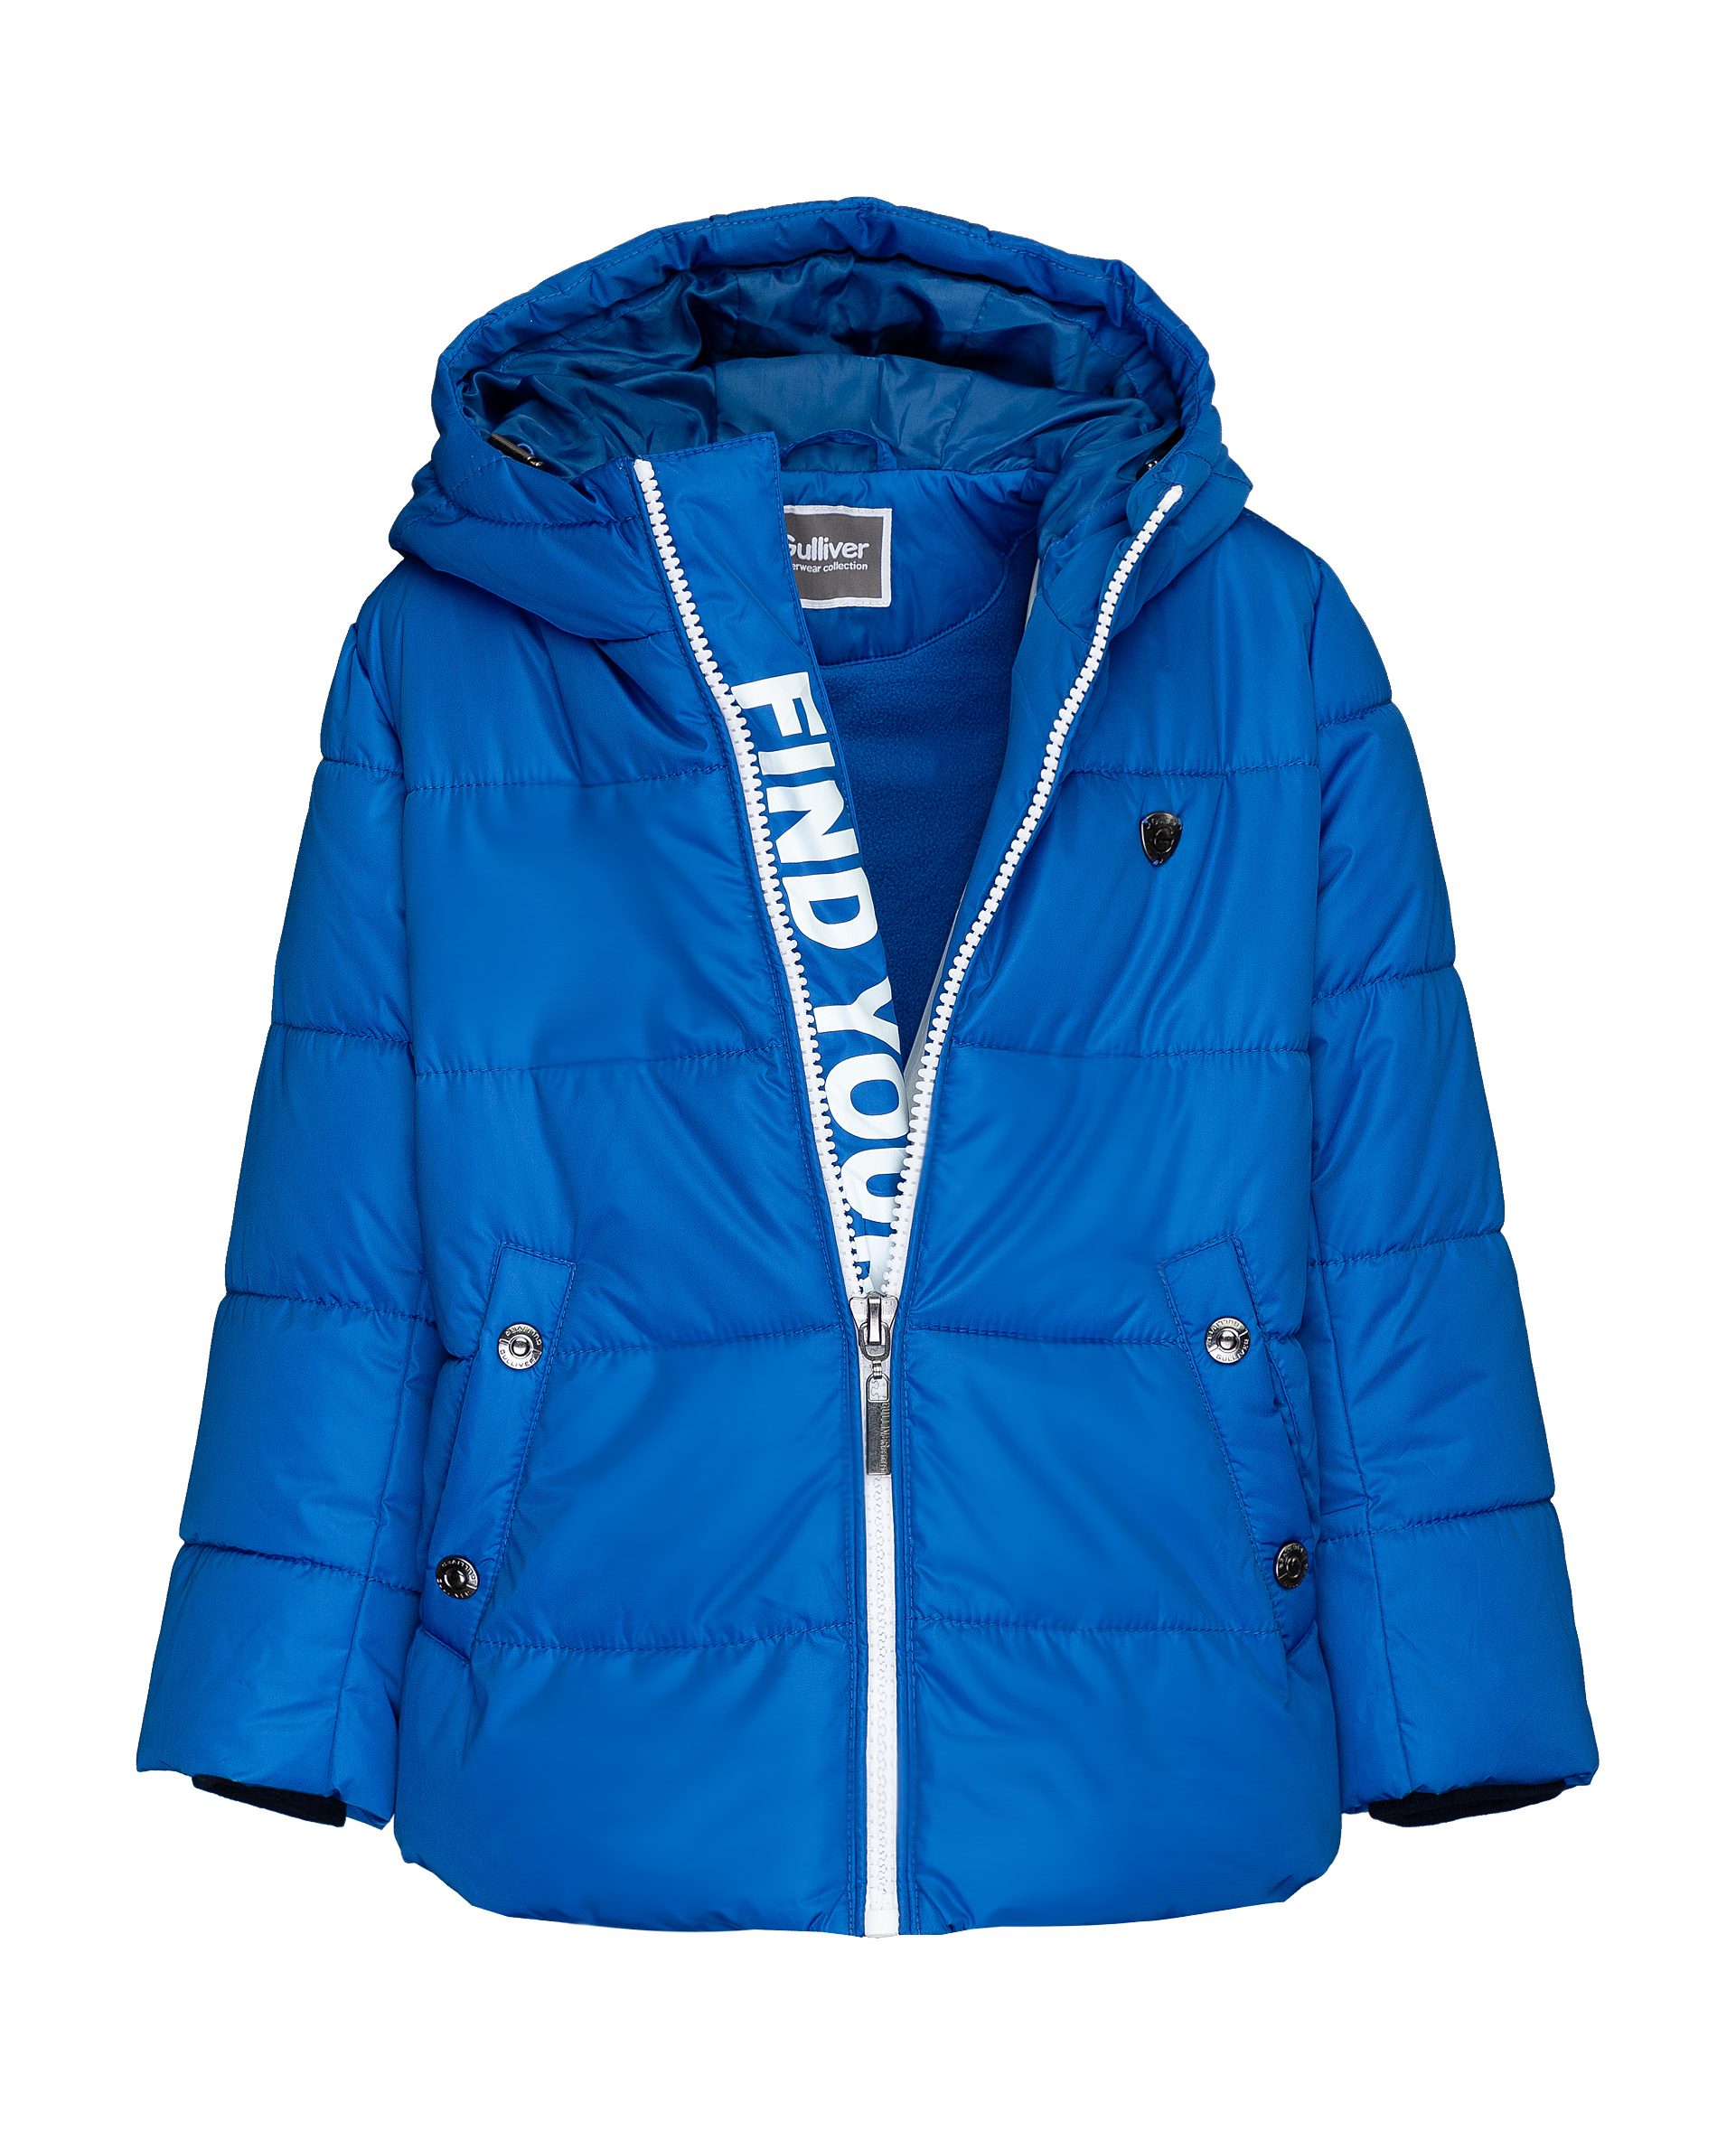 Синяя зимняя куртка Gulliver 21906BMC4102, размер 104, цвет синий - фото 4